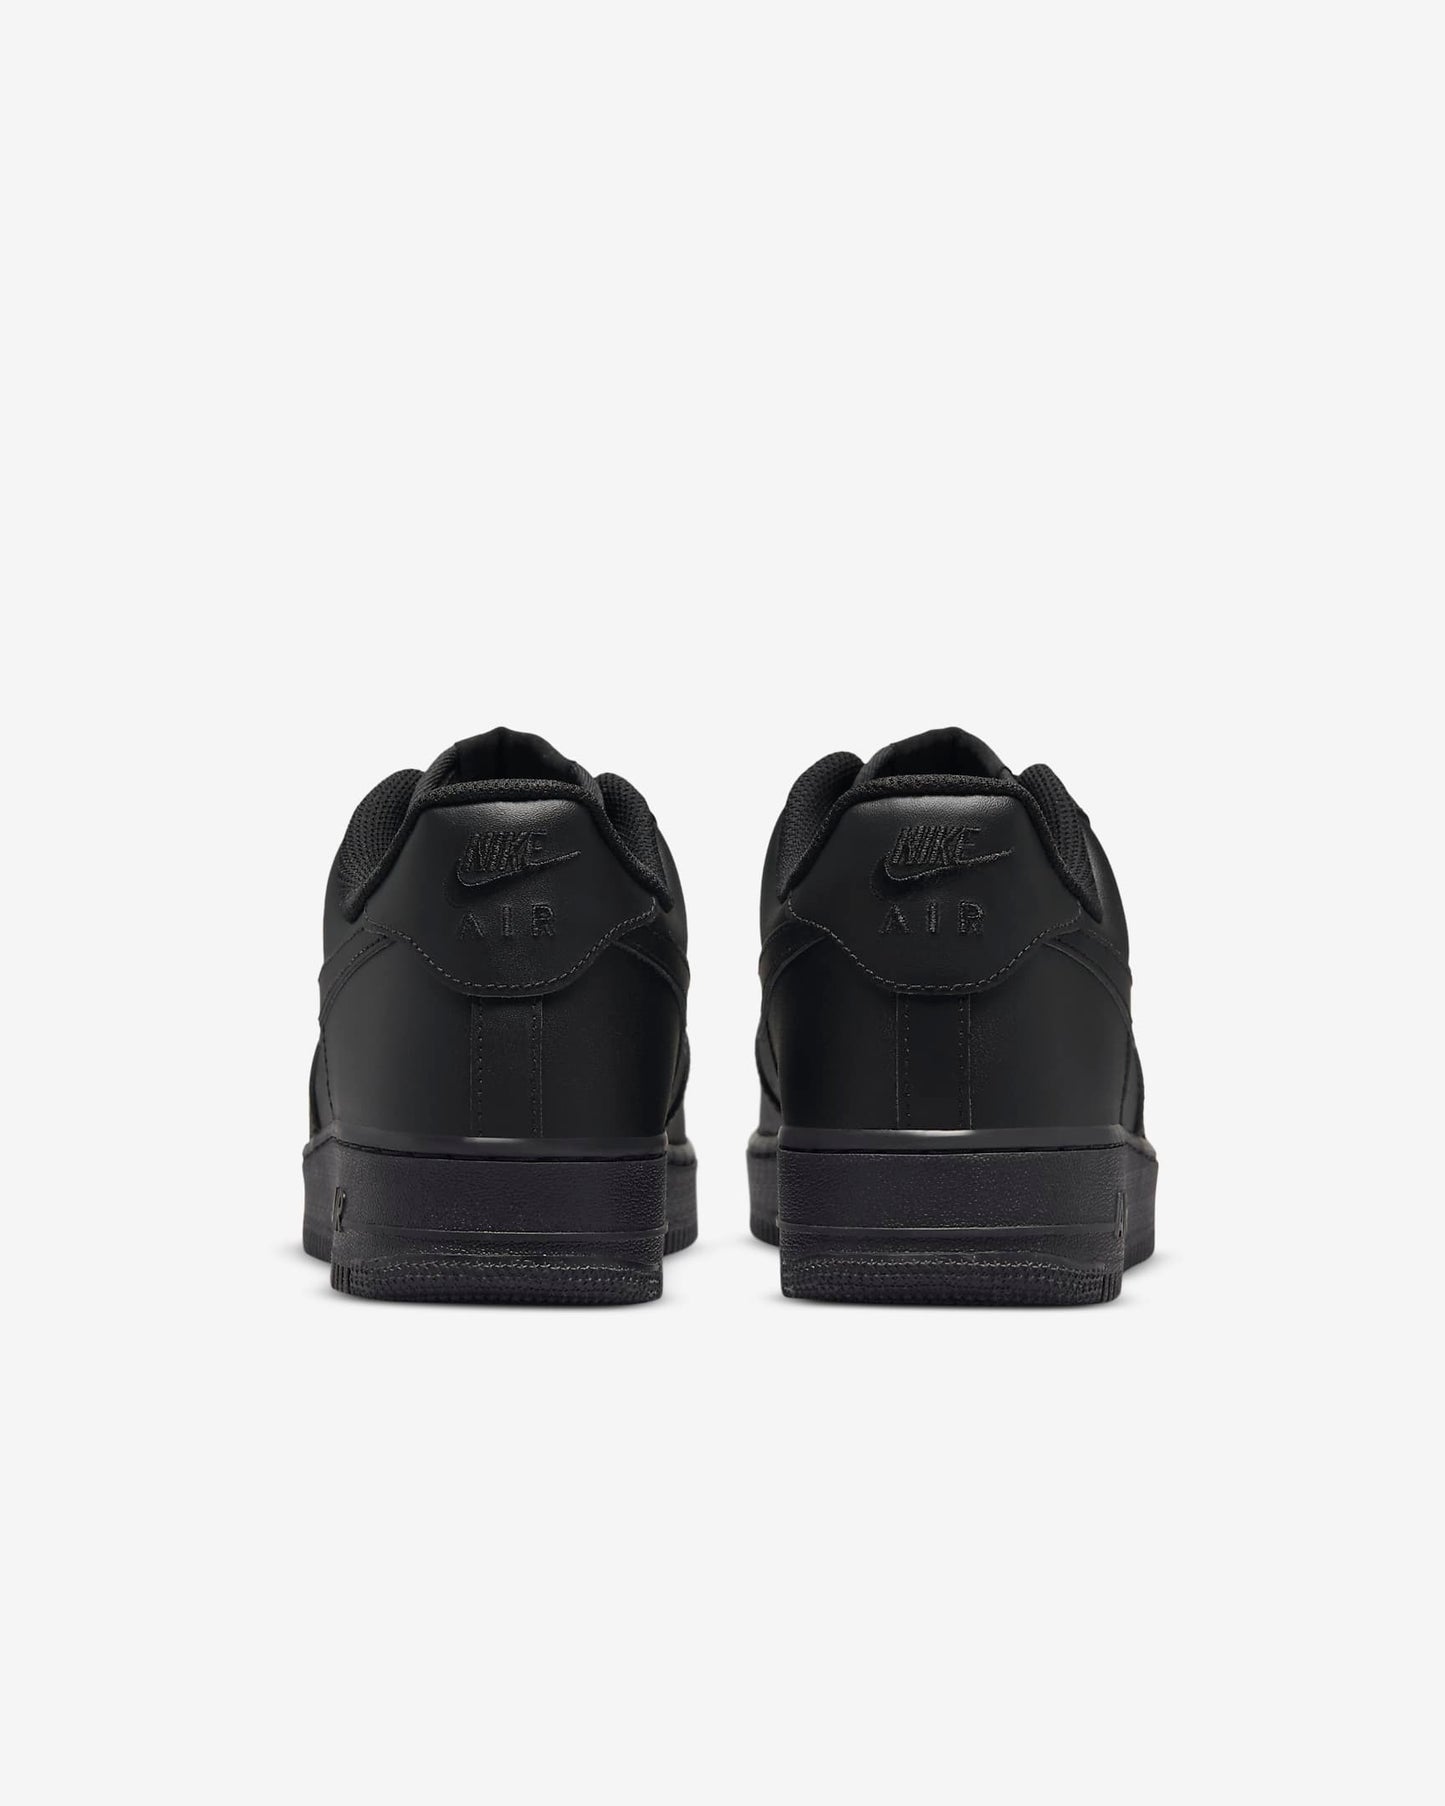 Nike Air Force 1 '07 Men's Shoes, Black/Black